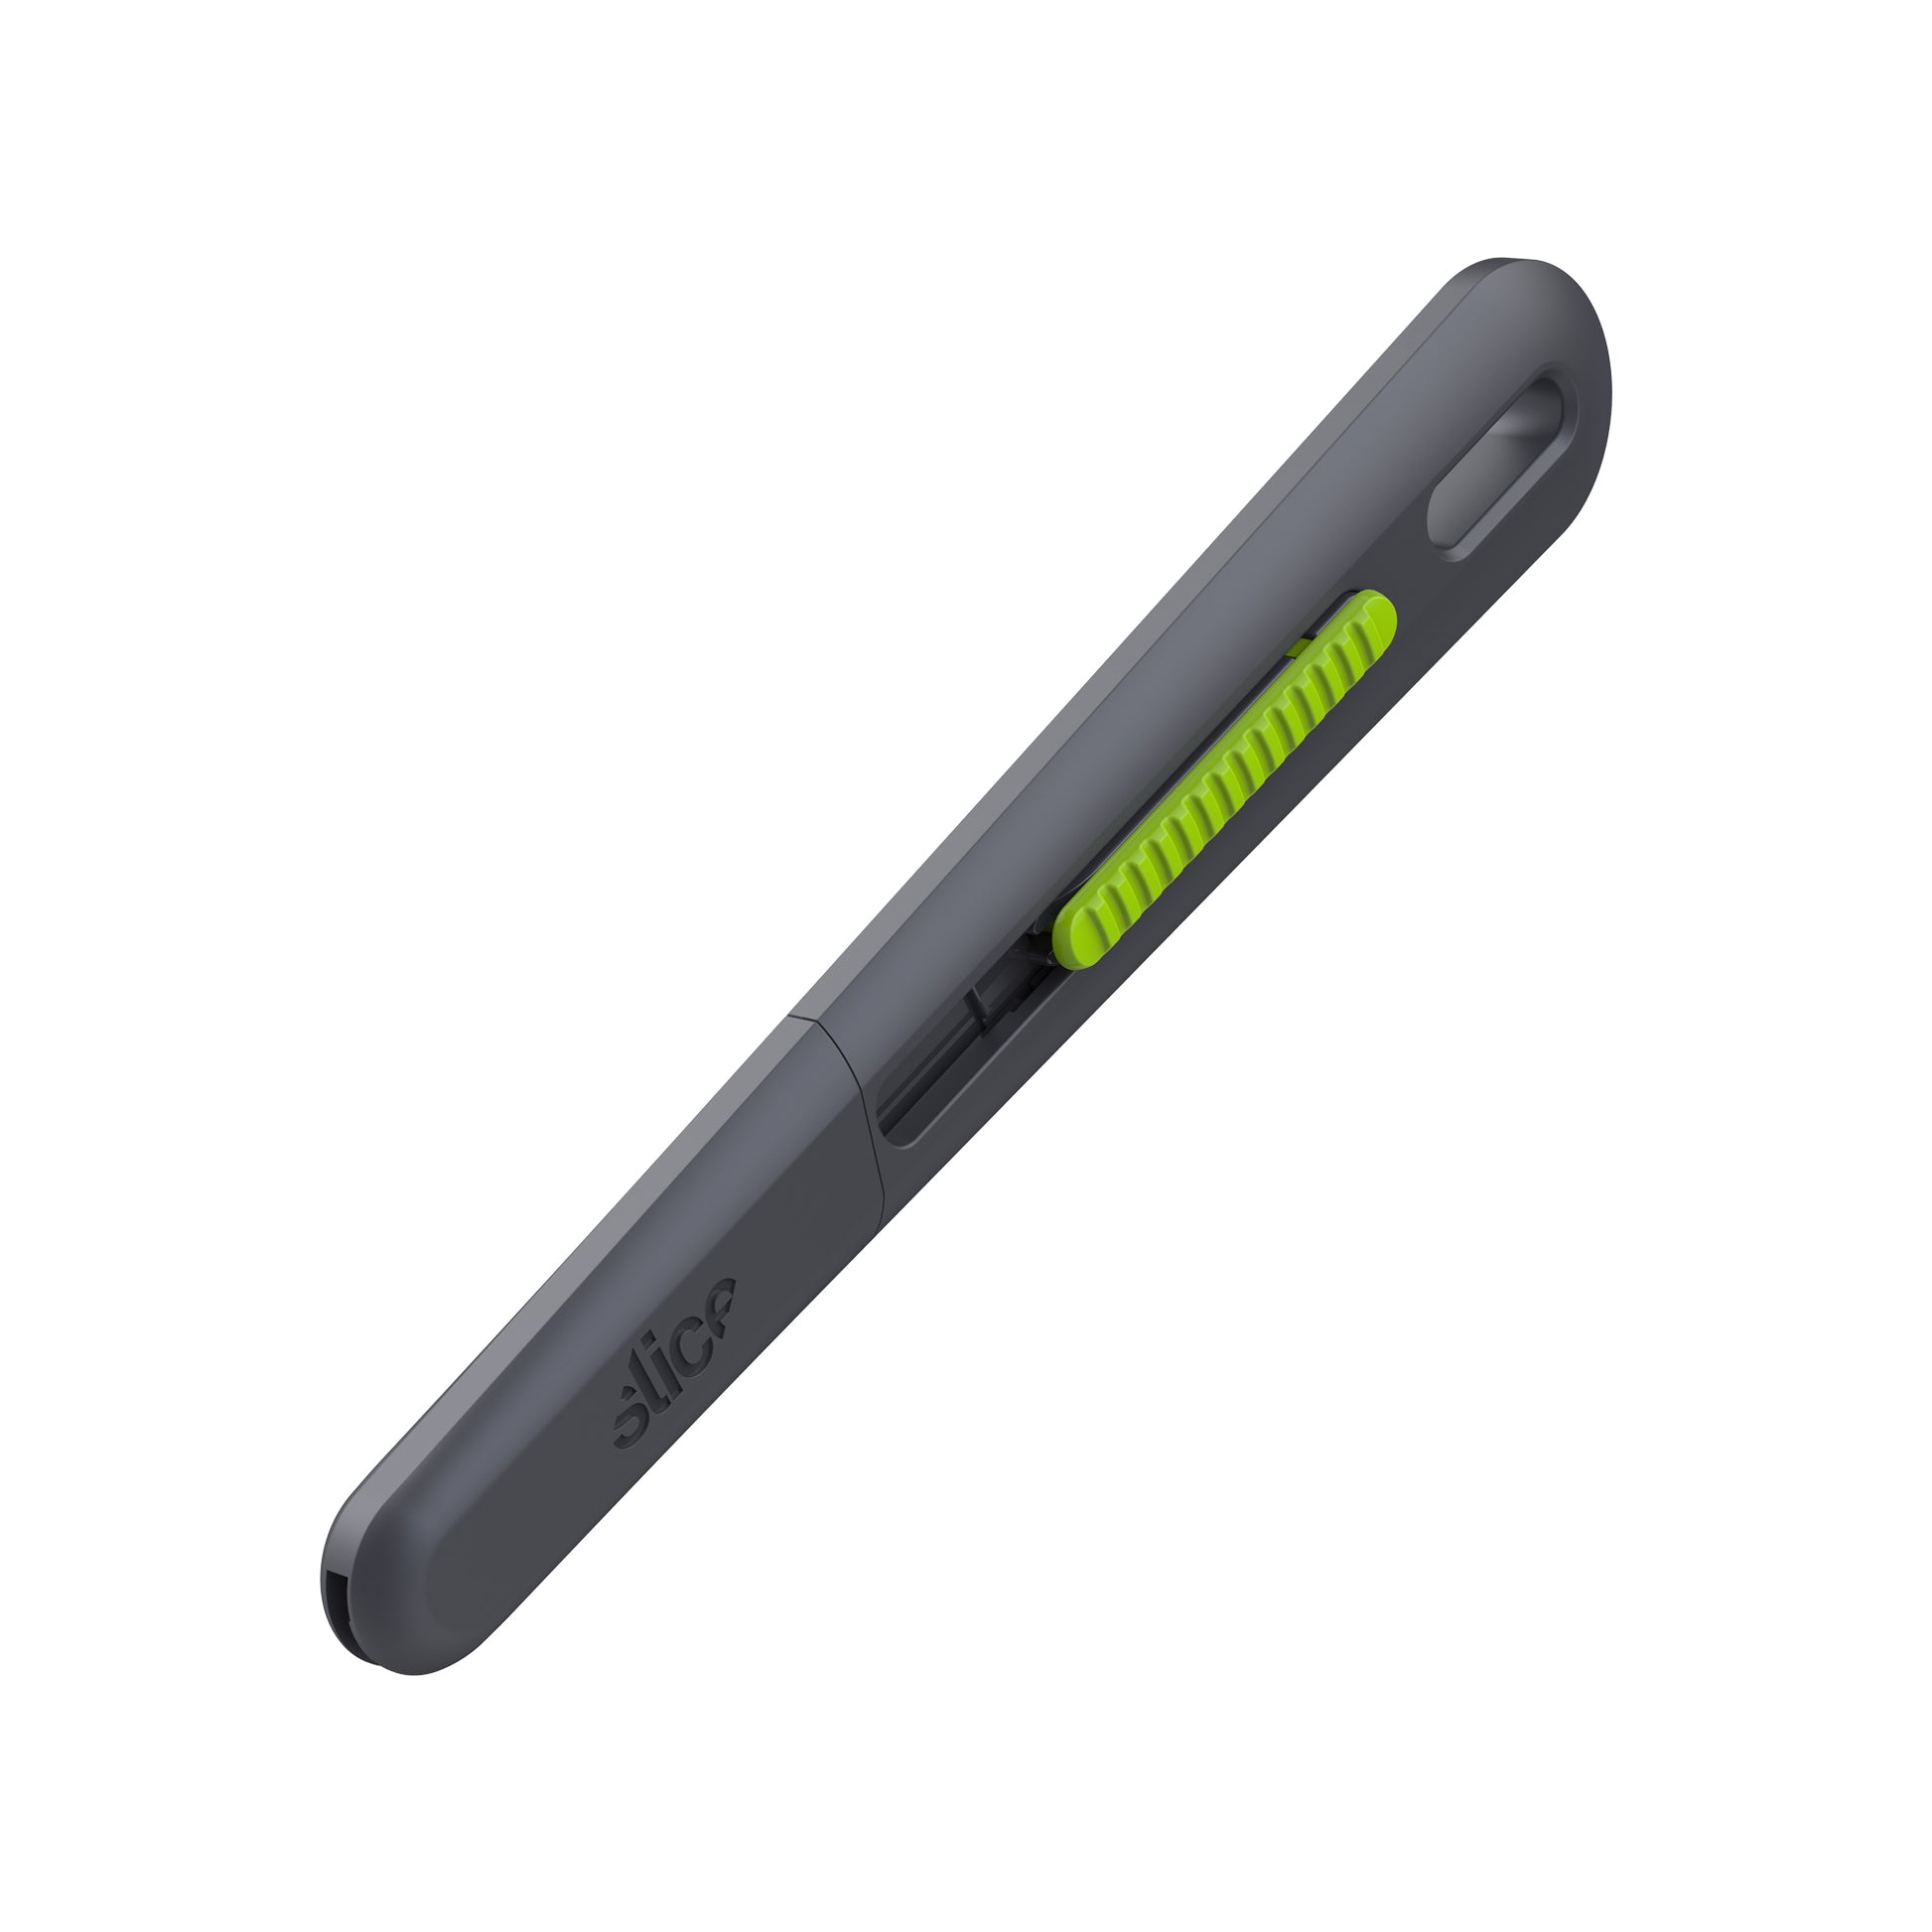 Slice Auto-Retractable Slim Pen Cutter - DaltonSafety